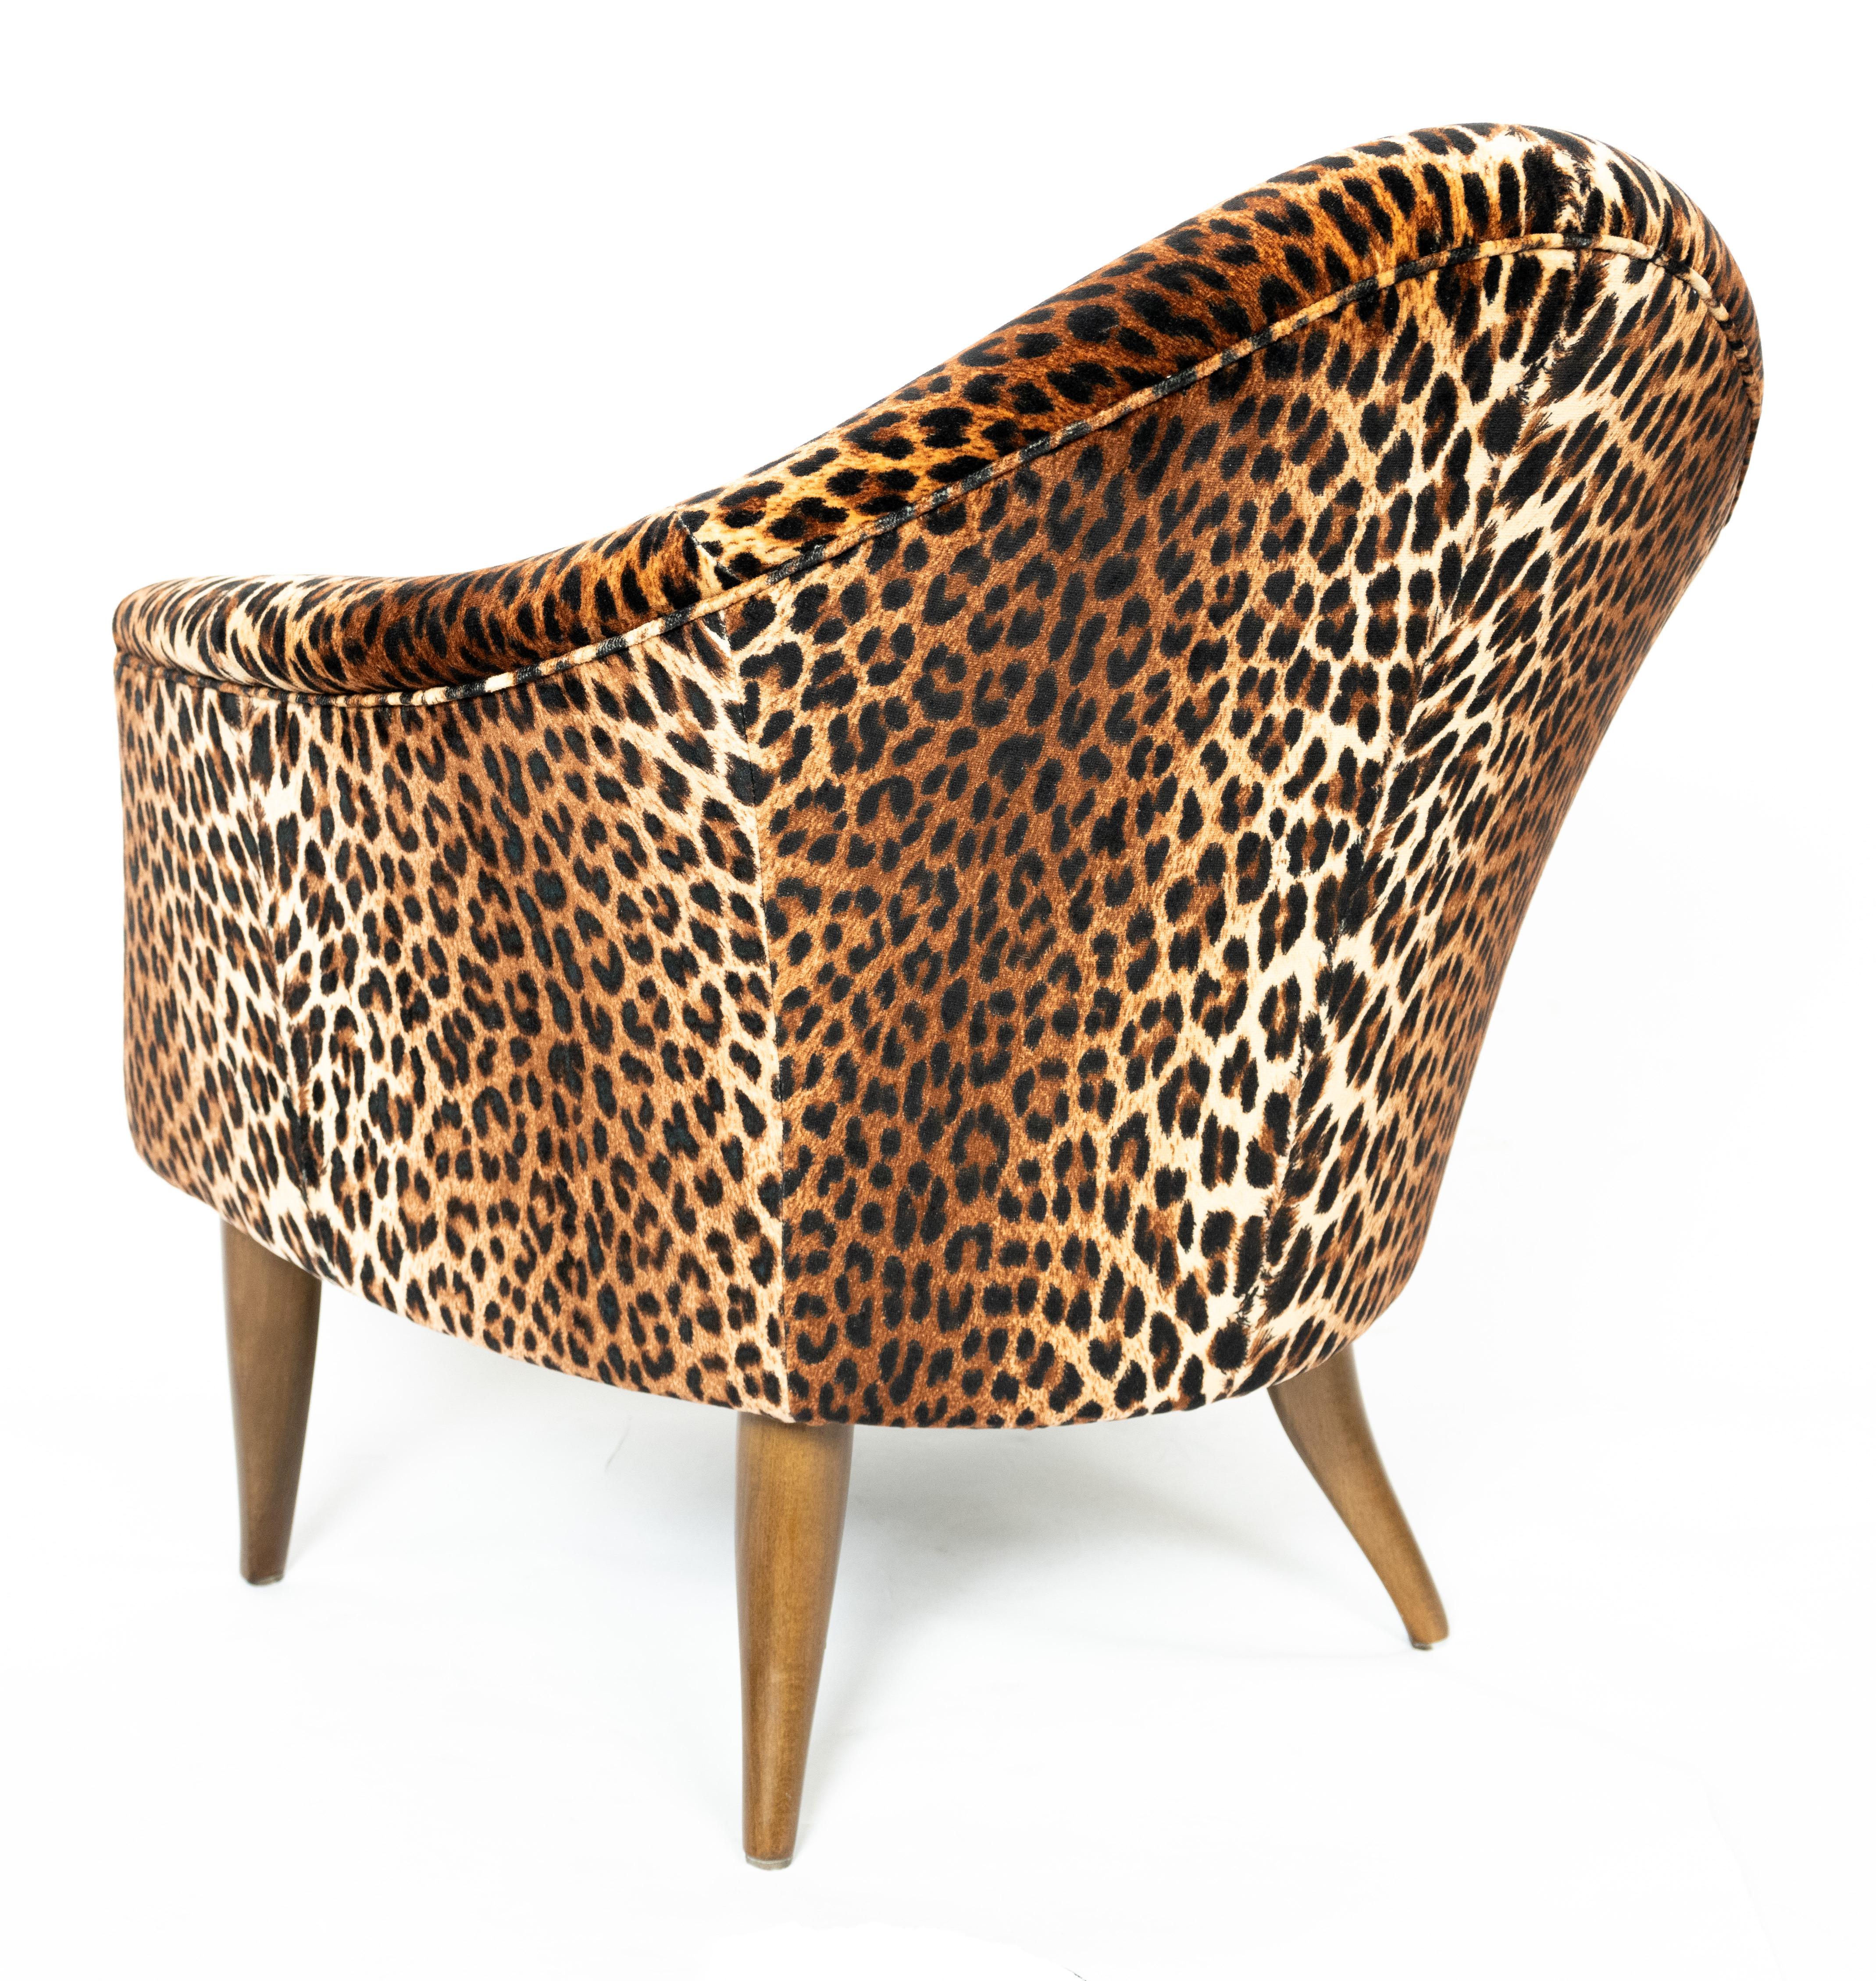 Mid-20th Century ‘Lila Adam’ Chair Swedish Midcentury Design Armchair Kerstin Hörlin-Holmquist For Sale